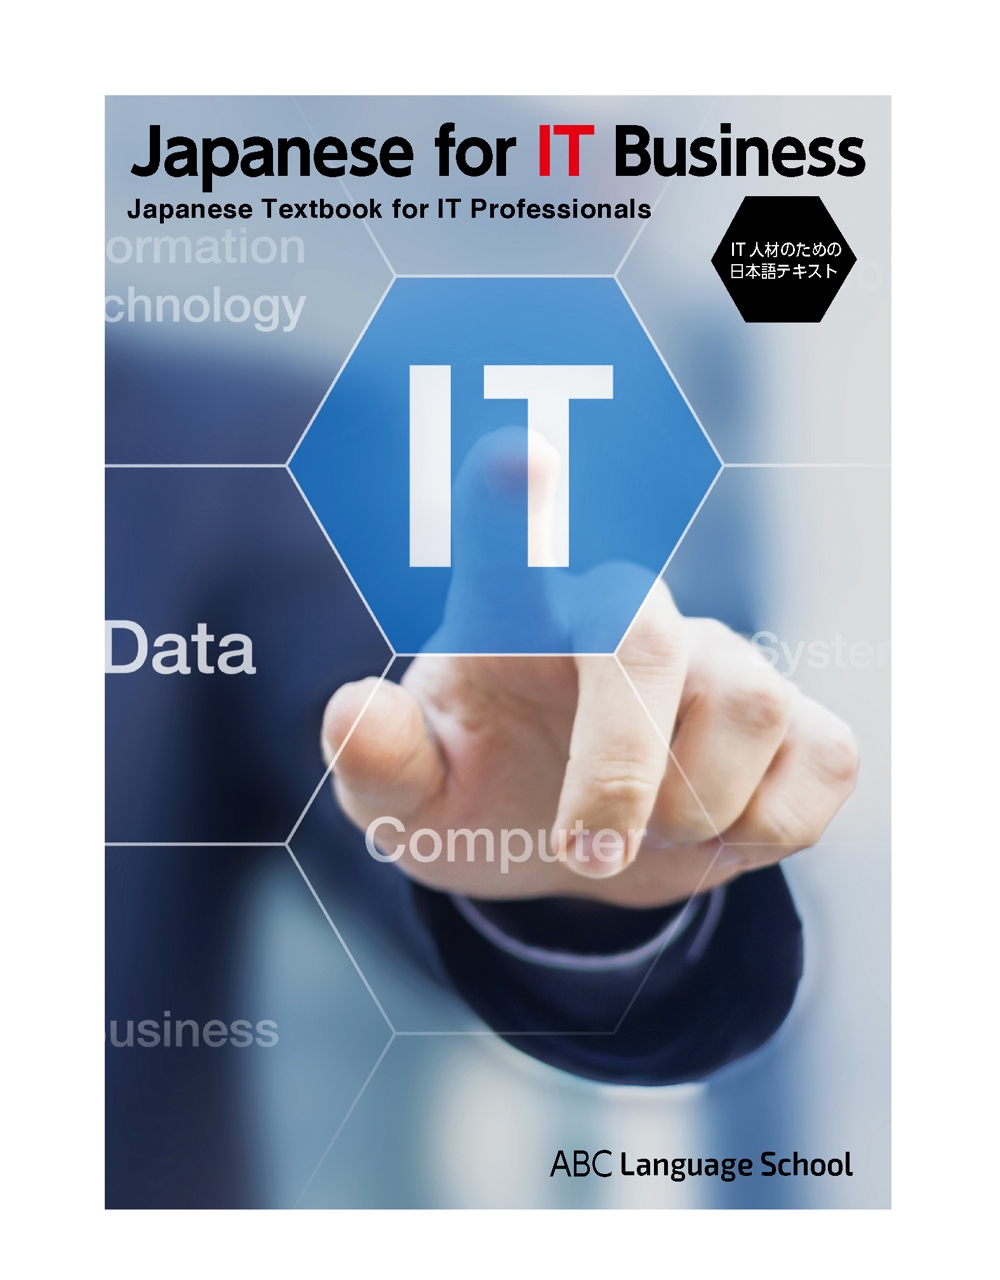 japaniese for it business 表紙 .jpg